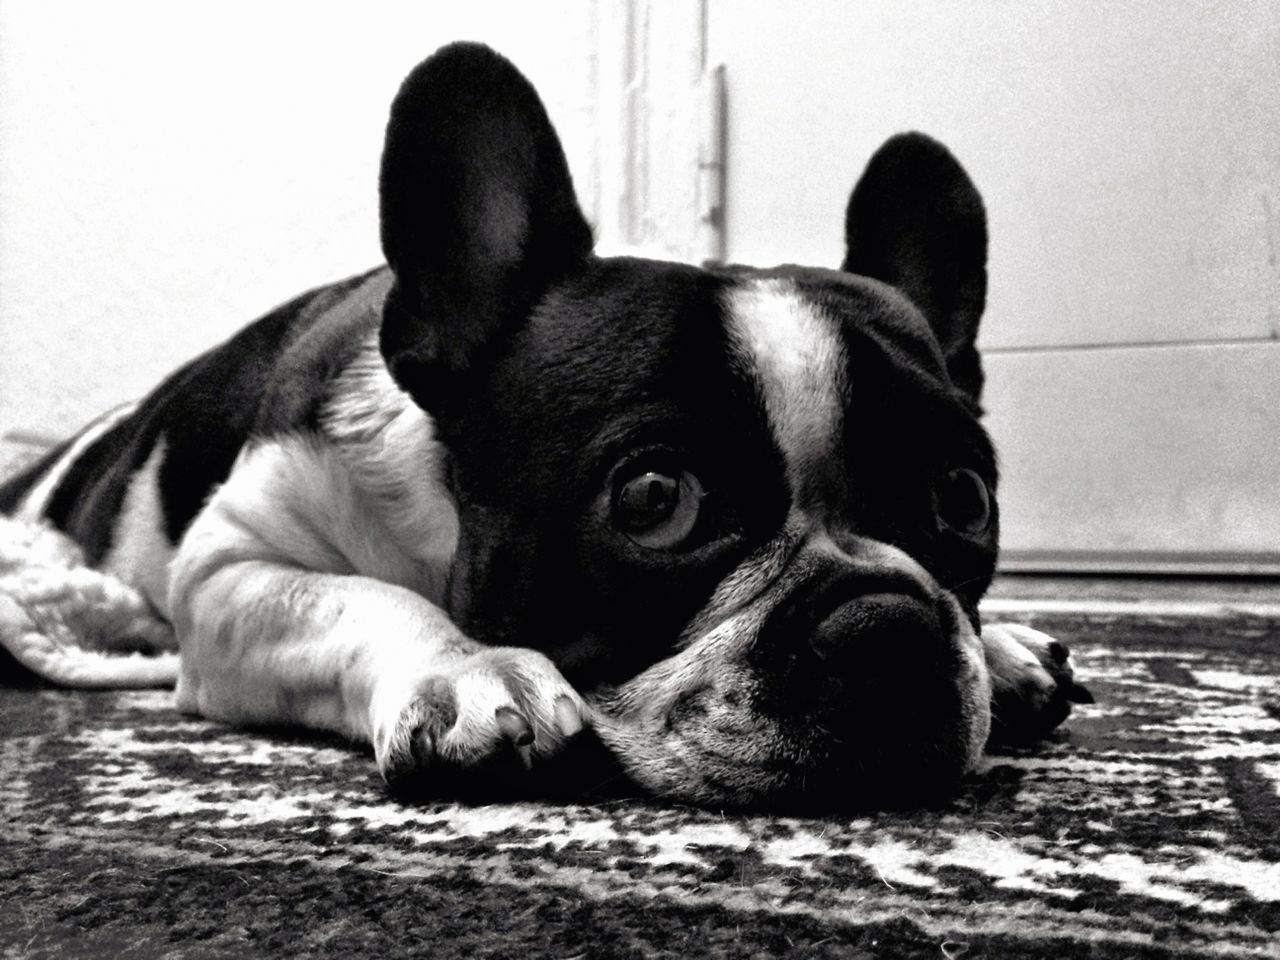 Portrait of dog resting on carpet at home